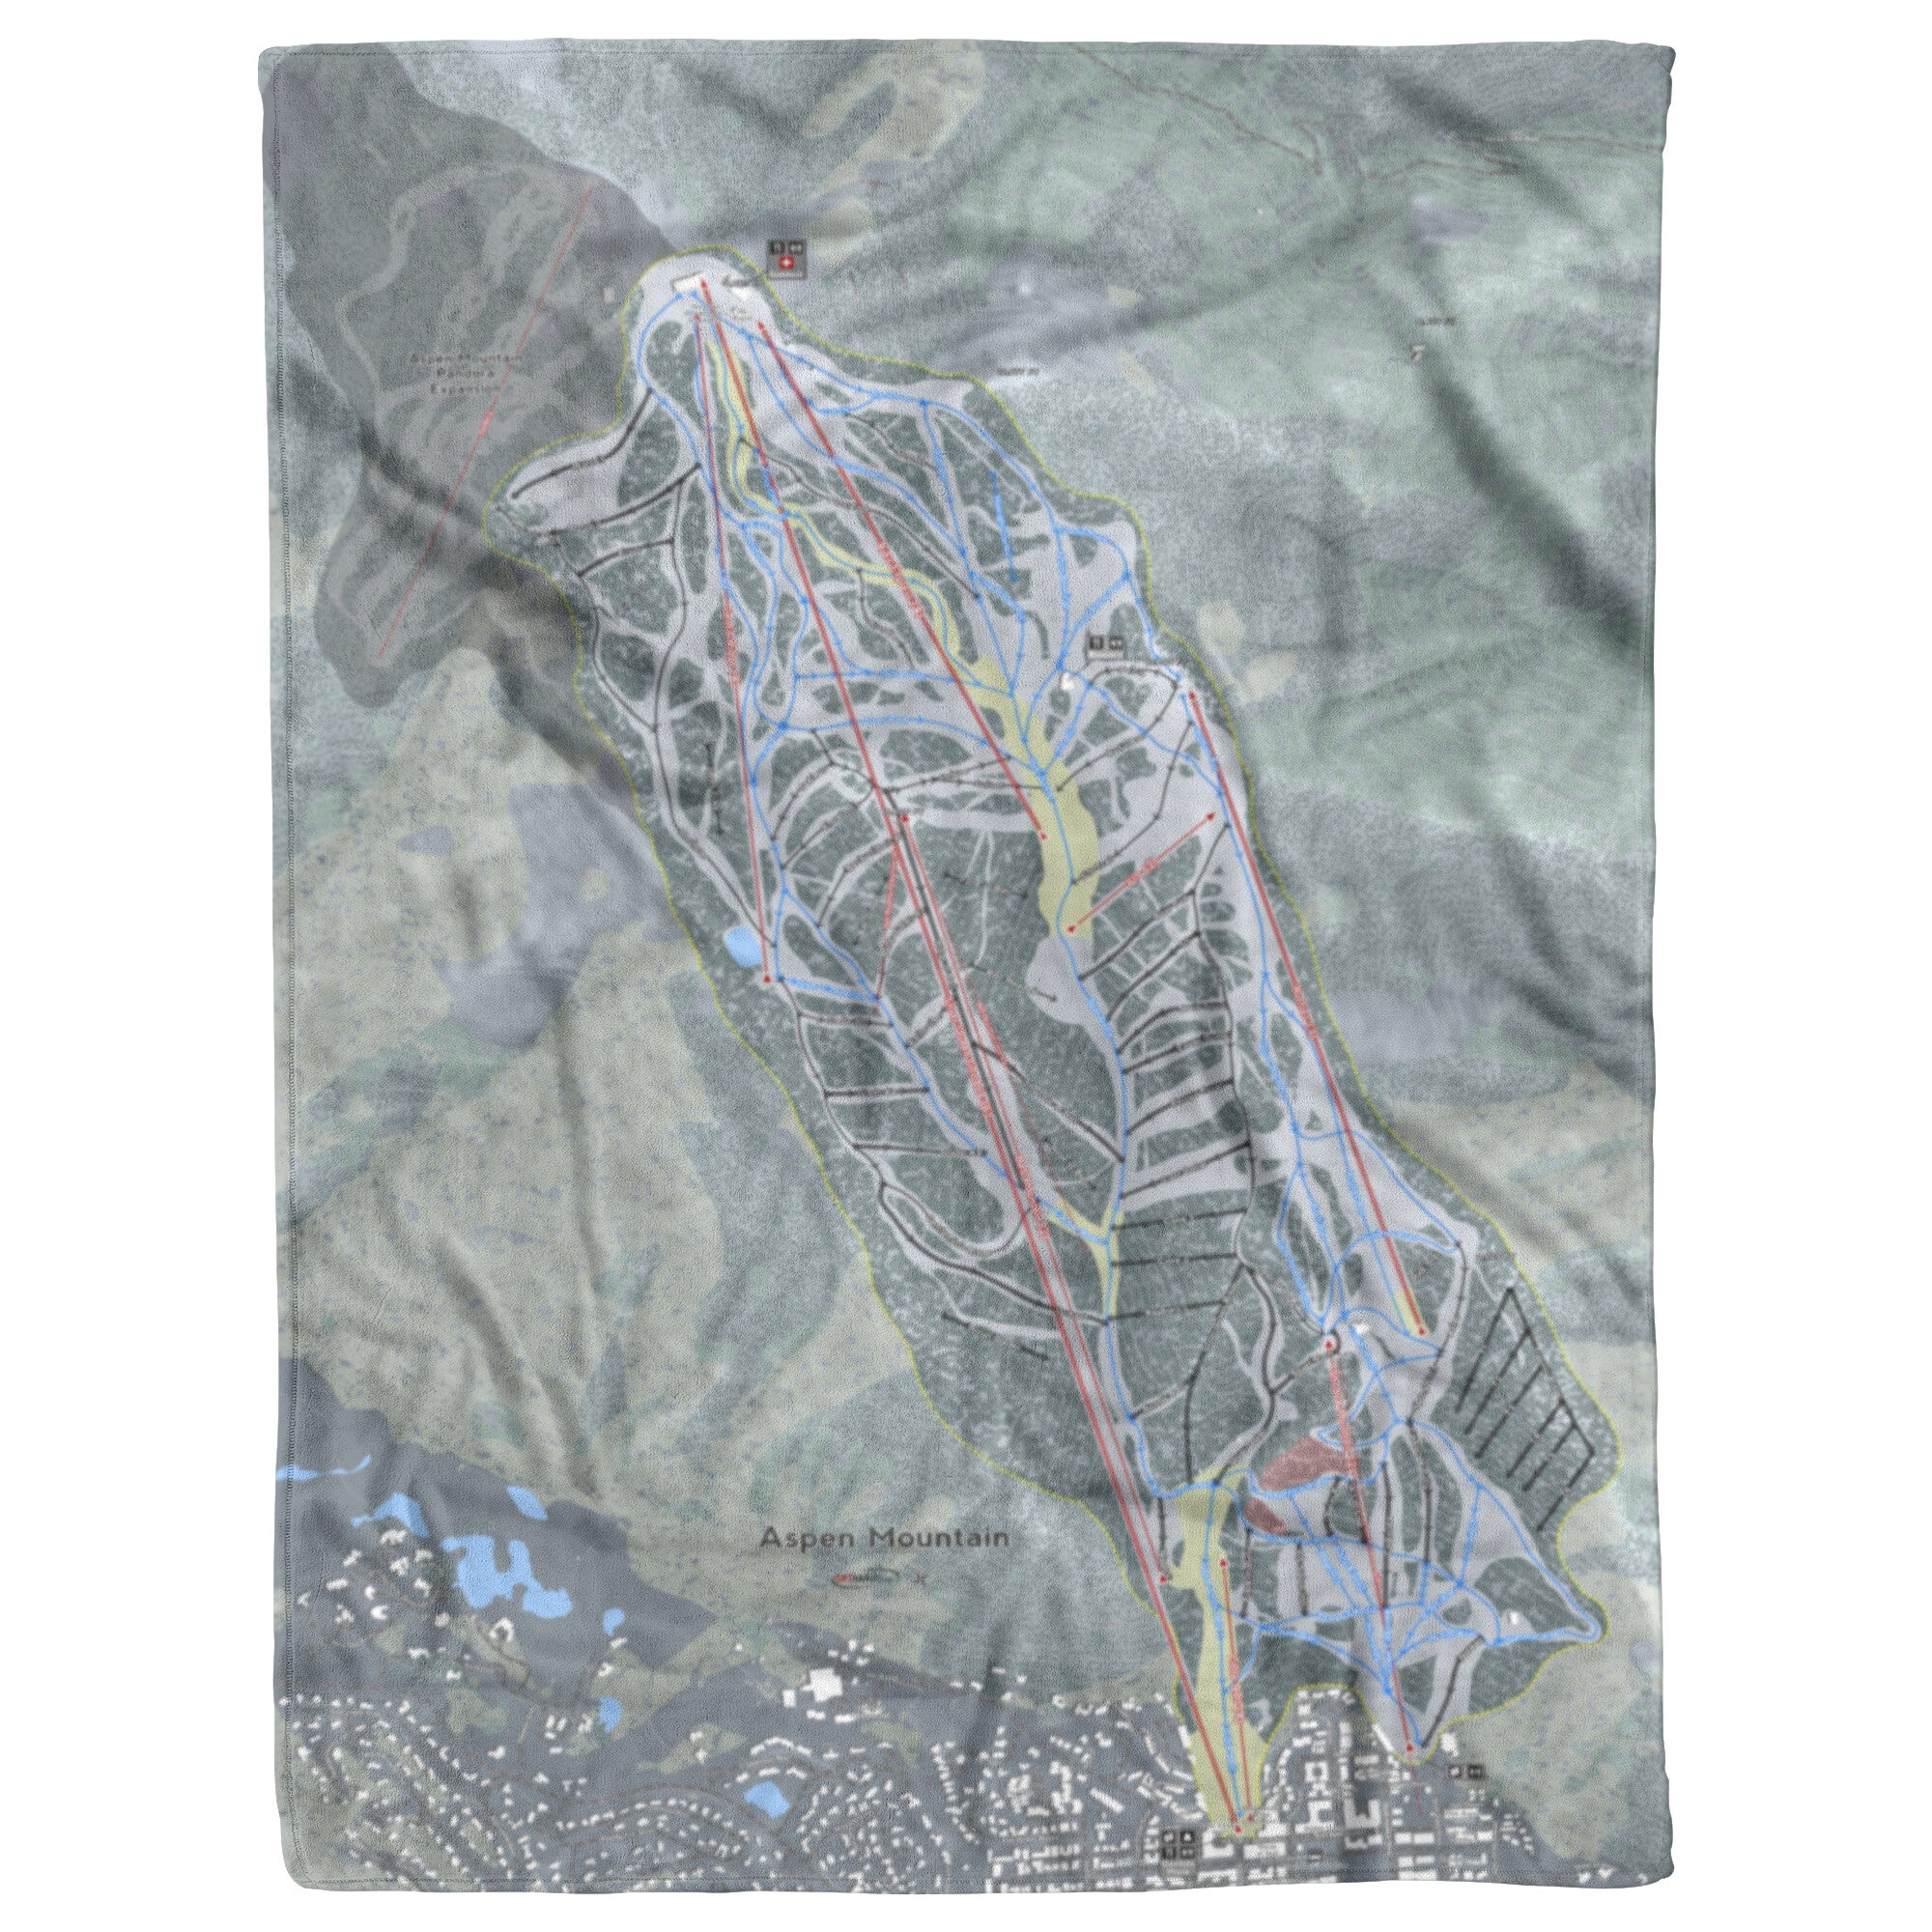 Aspen Mountain, Colorado Ski Trail Map Blanket